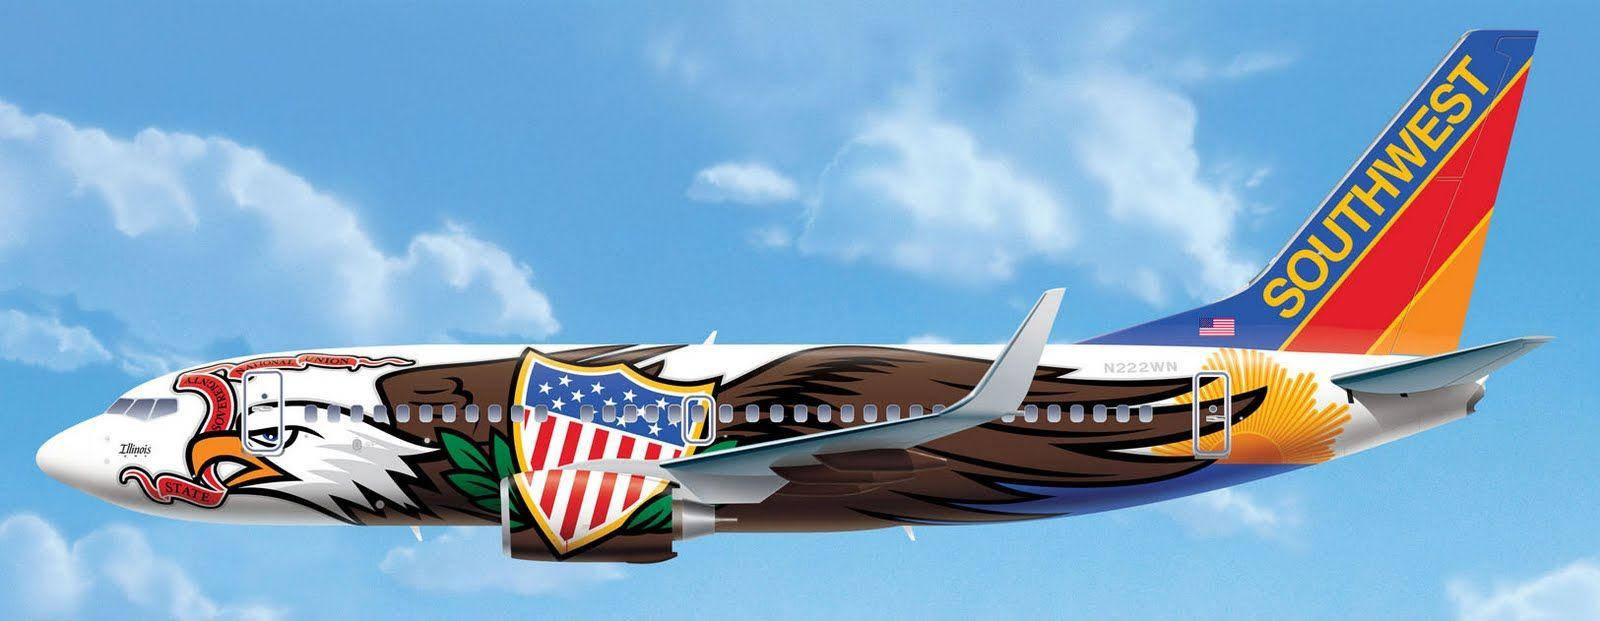 Adlerflugzeug Southwest Airlines Wallpaper